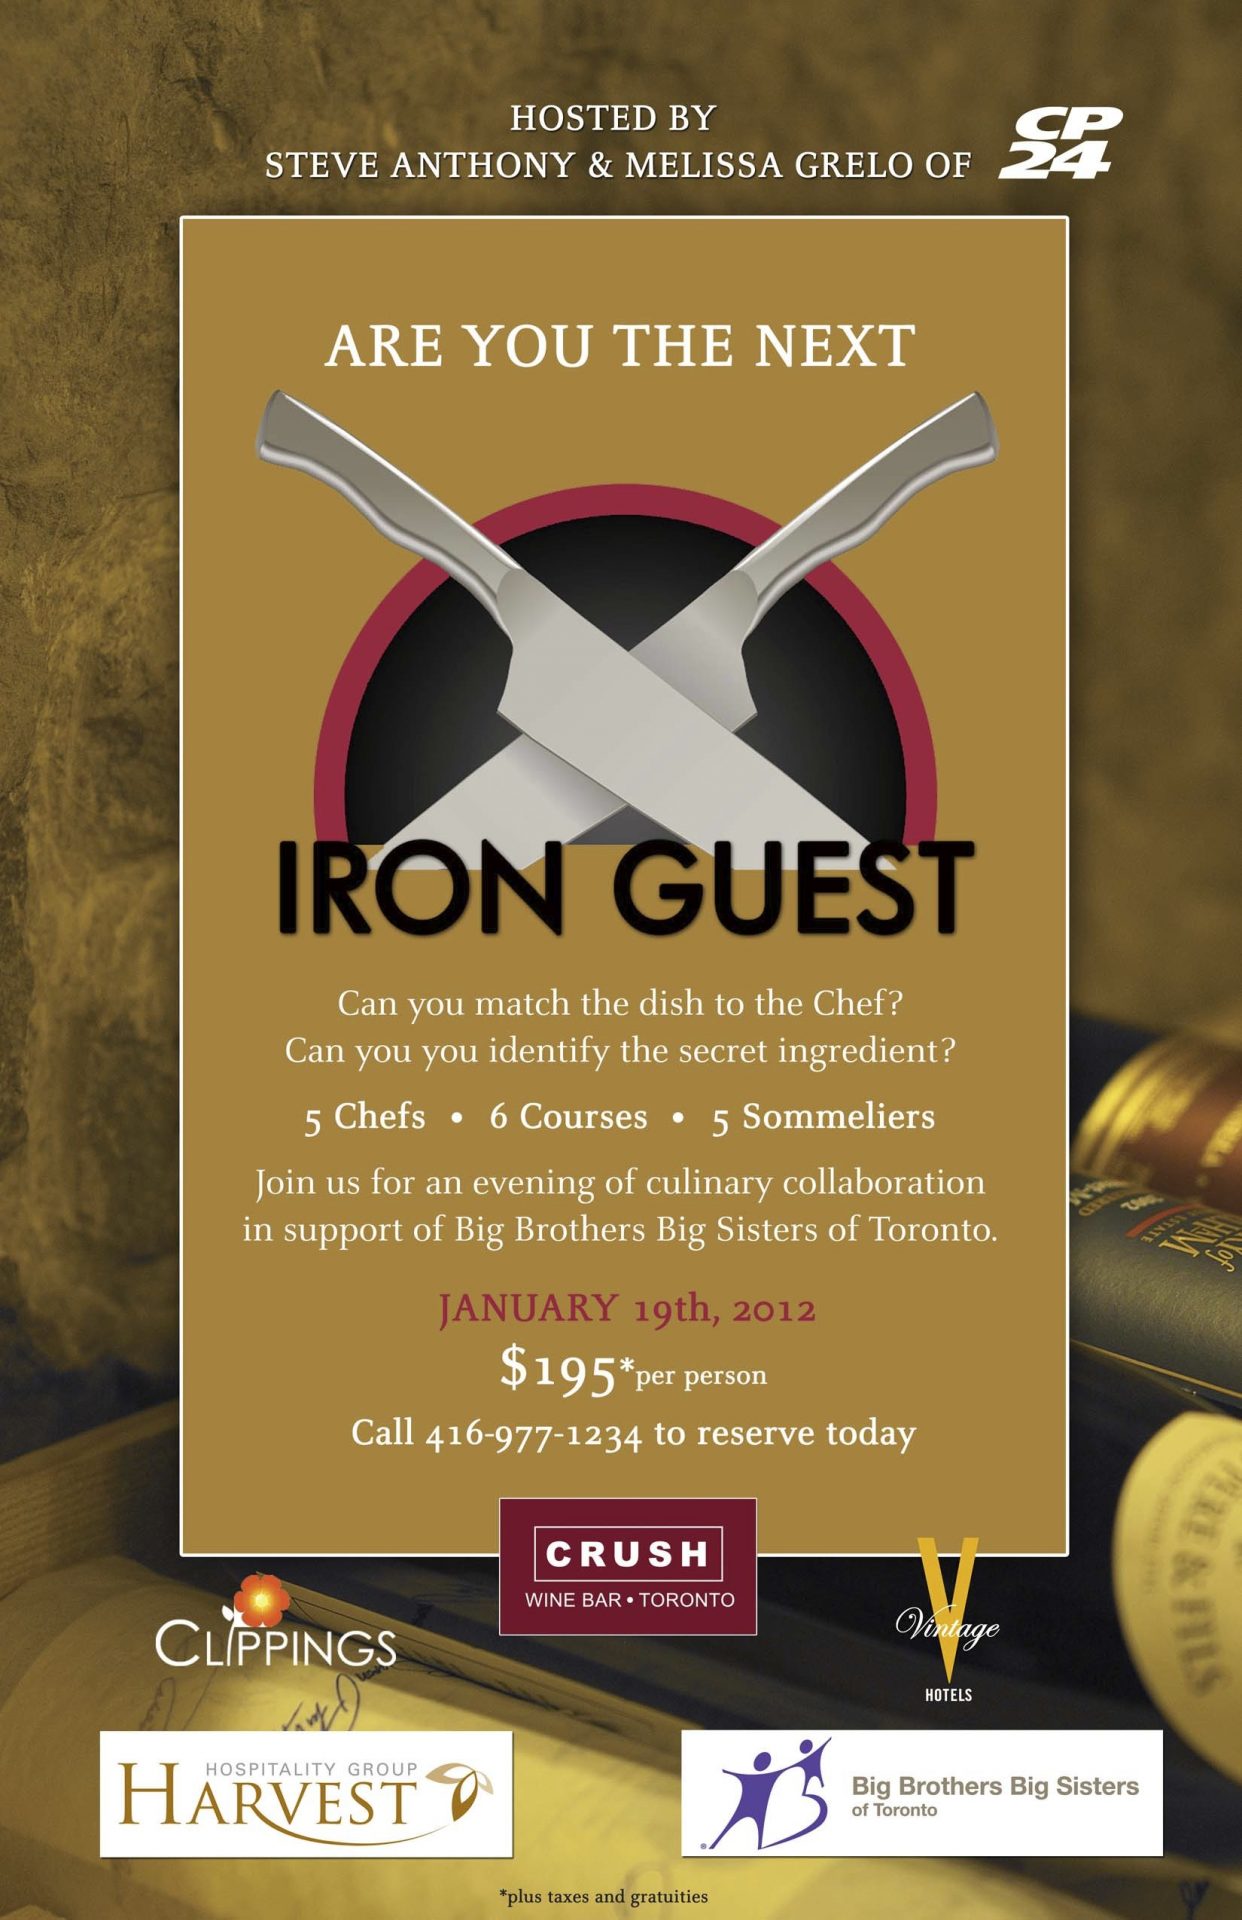 Crush Winebar presents: Iron Guest